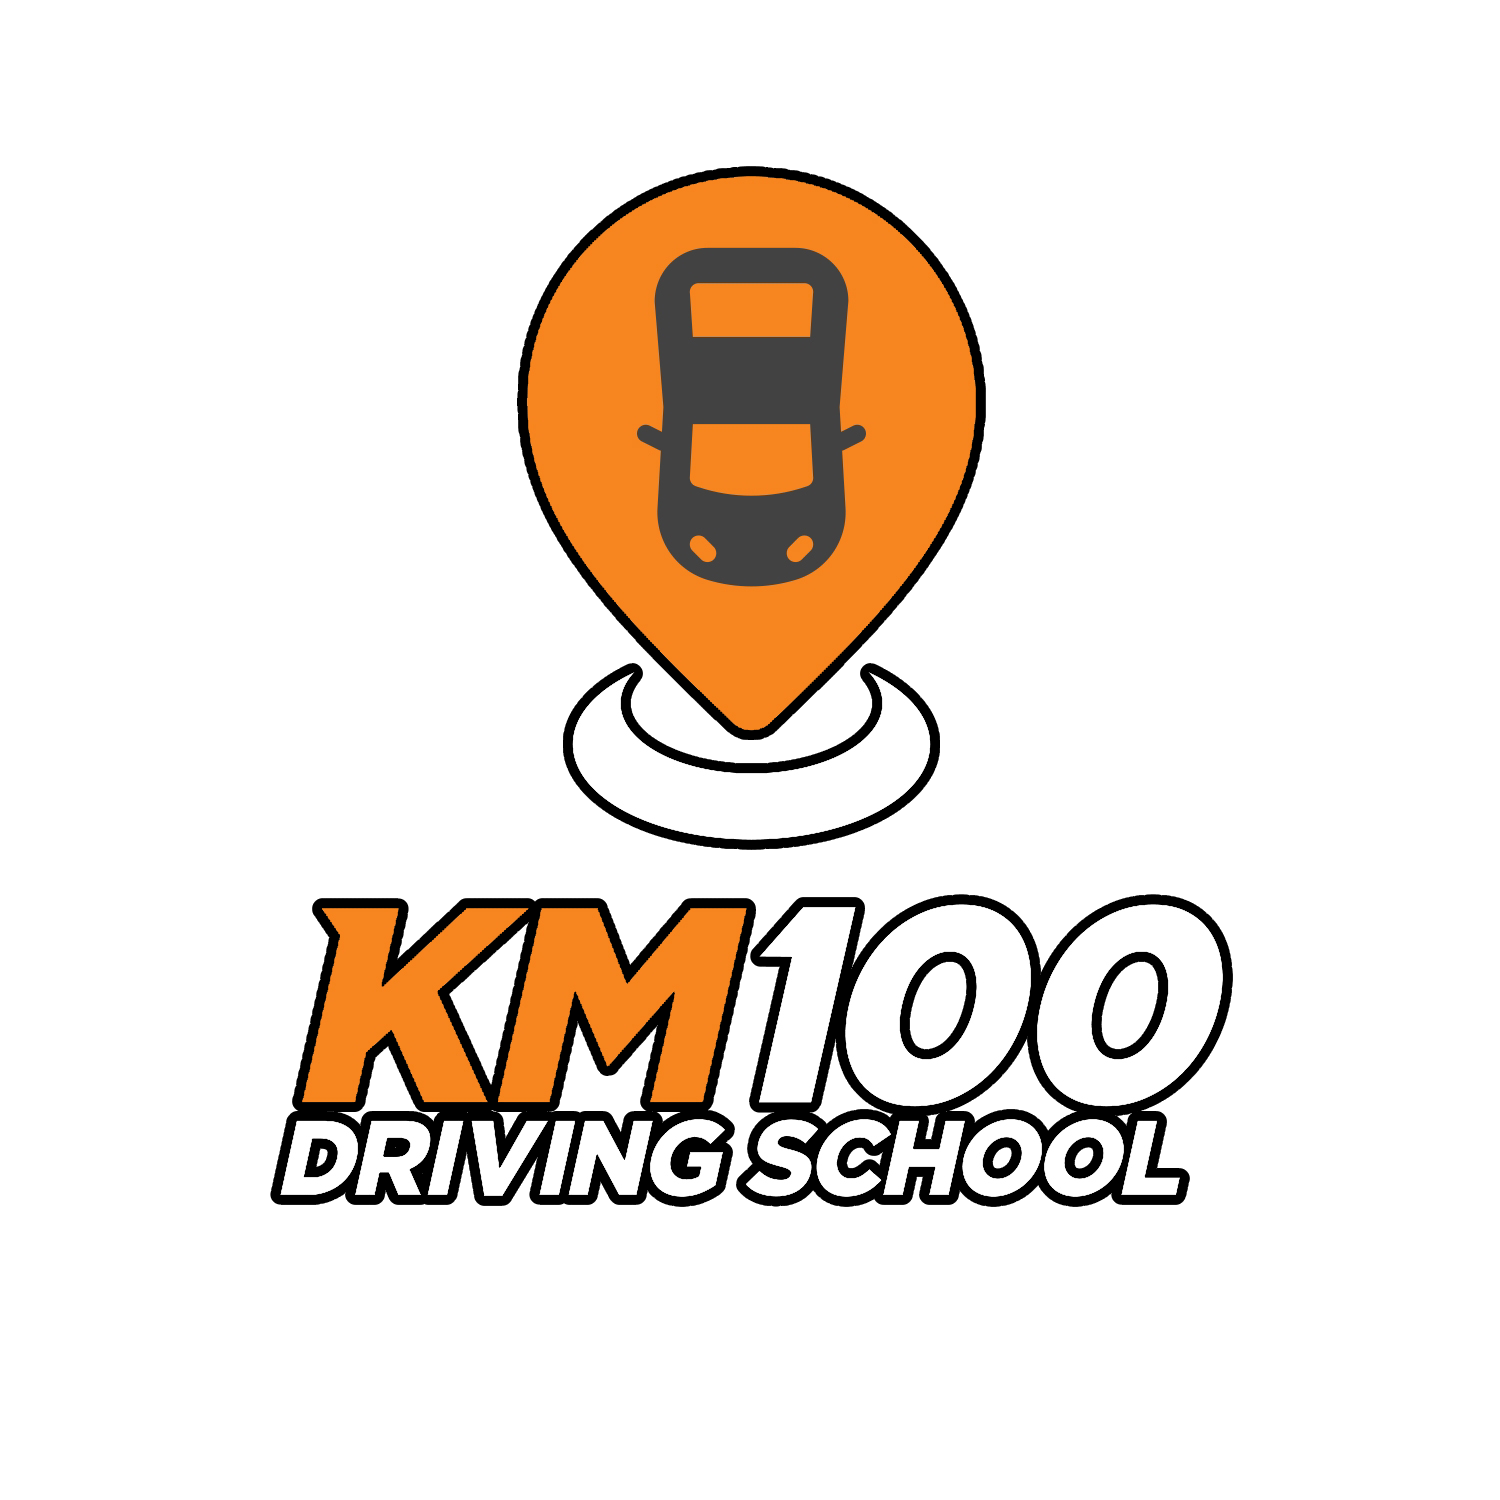 KM100 Driving School